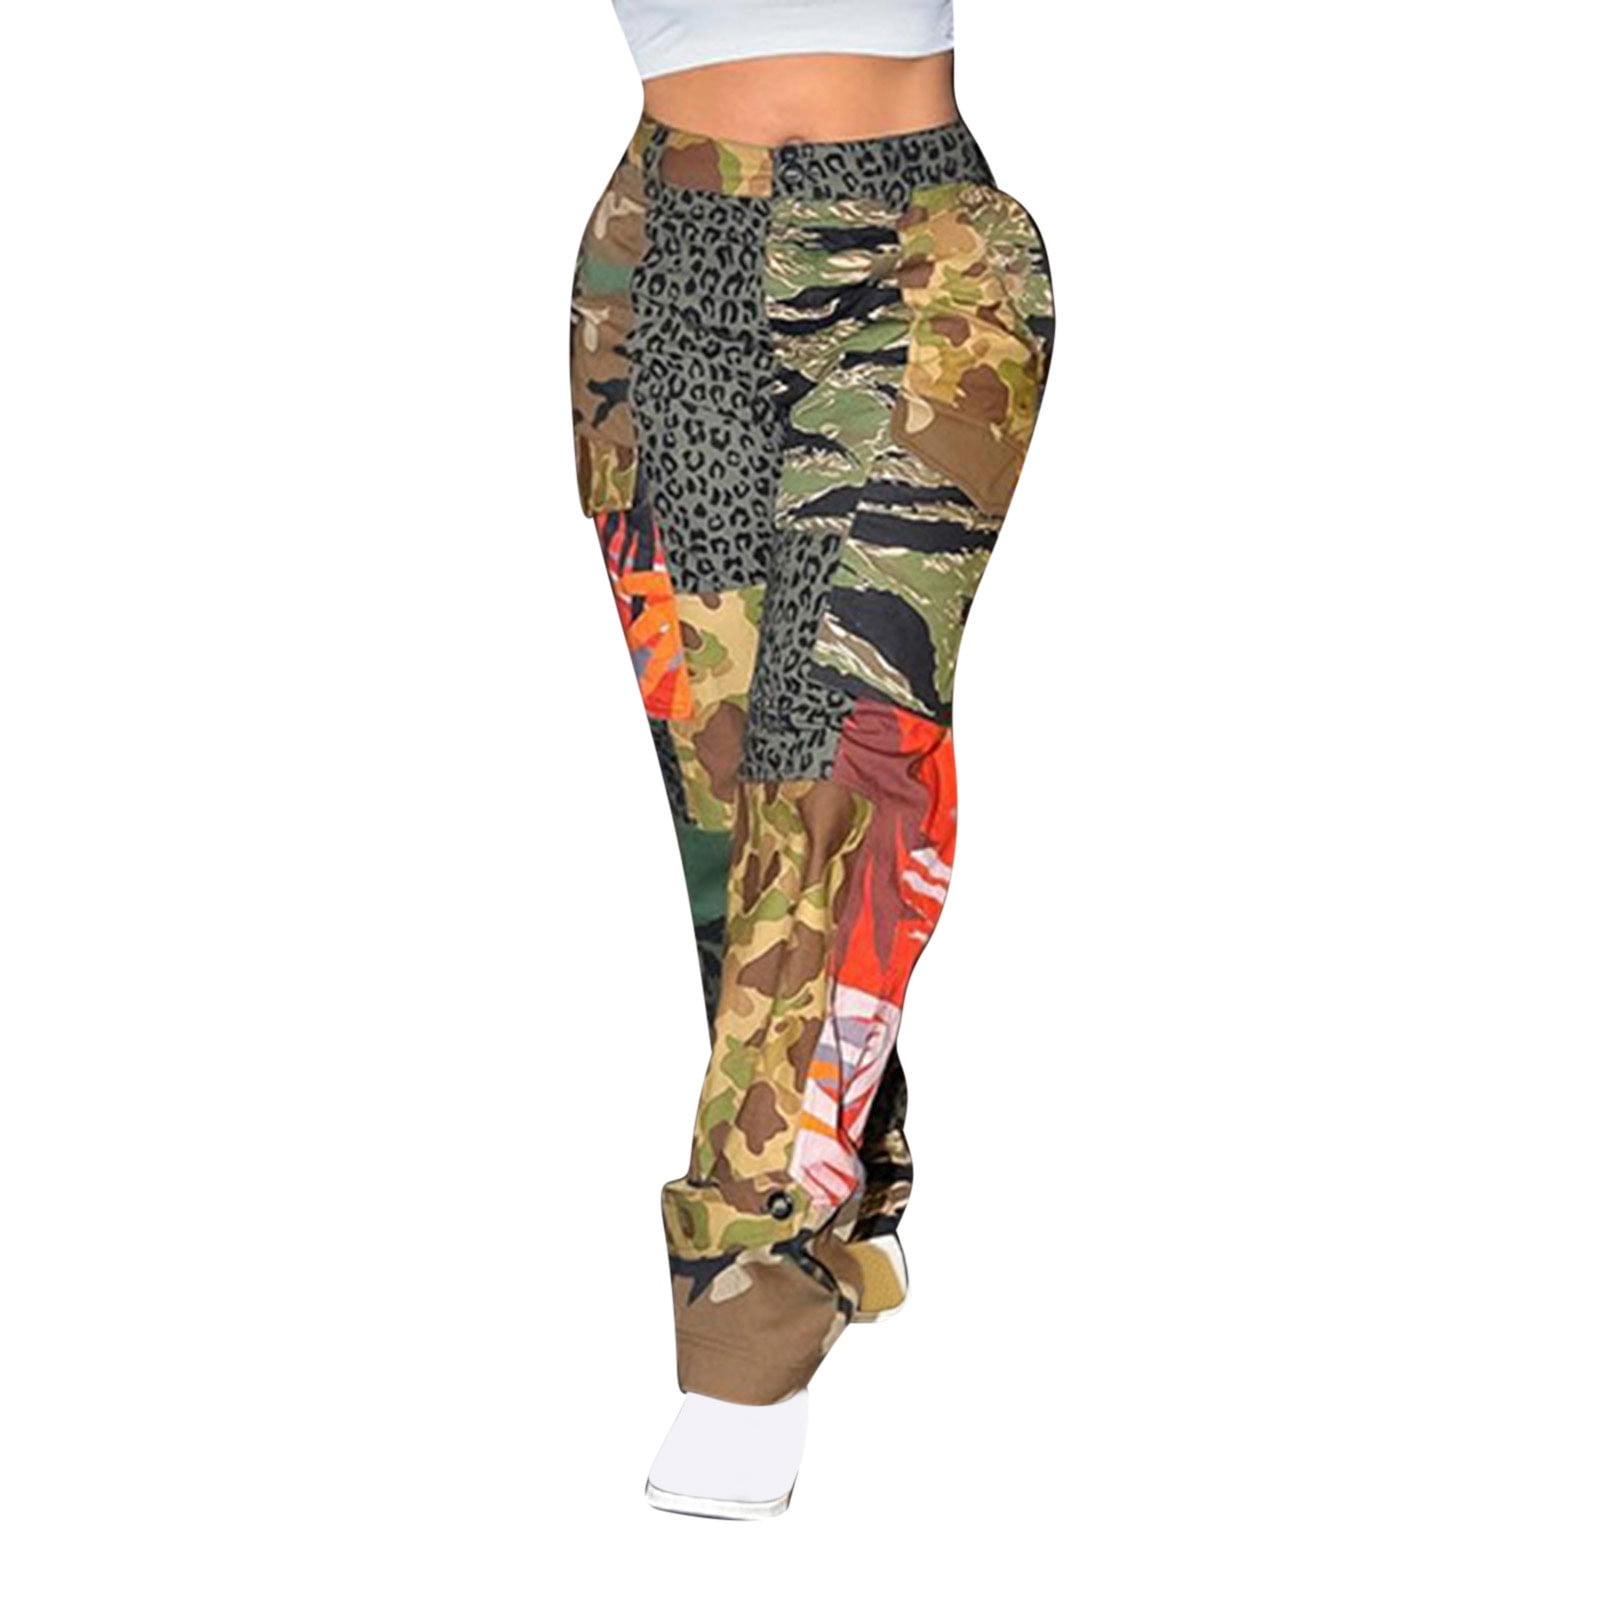 JWZUY Women Casual Color Block Camo Pants High Waisted Army Fatigue Baggy Long Joggers Pants with Pockets Camouflage L 37530fab 2765 46d9 b3d6 67bd739261ce.70d73e8550e8cdab2c3d57cb722c77e3